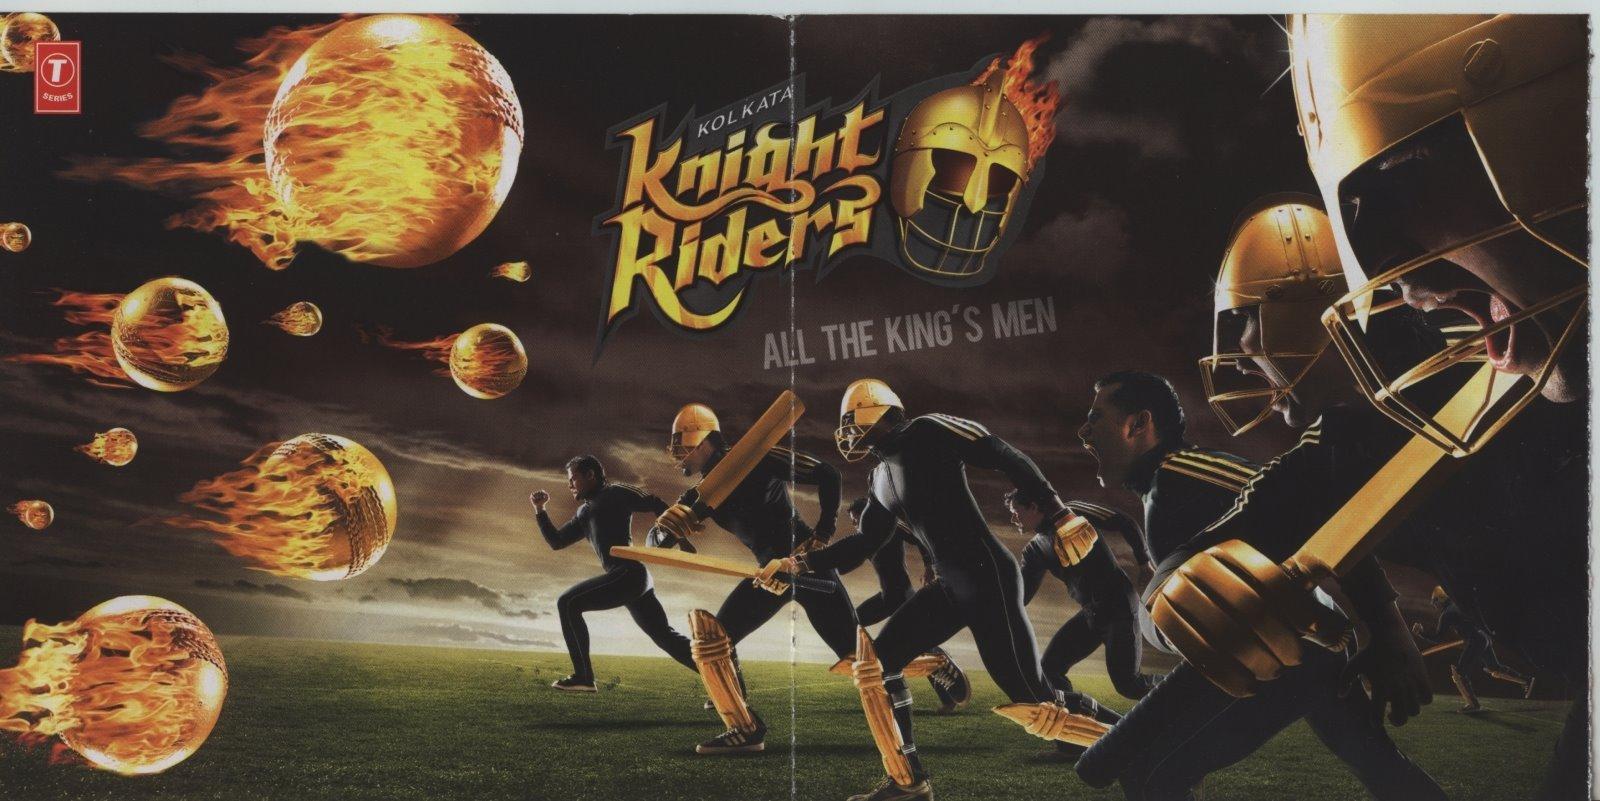 Free download kolkata knight riders wallpaper kkr wallpaper